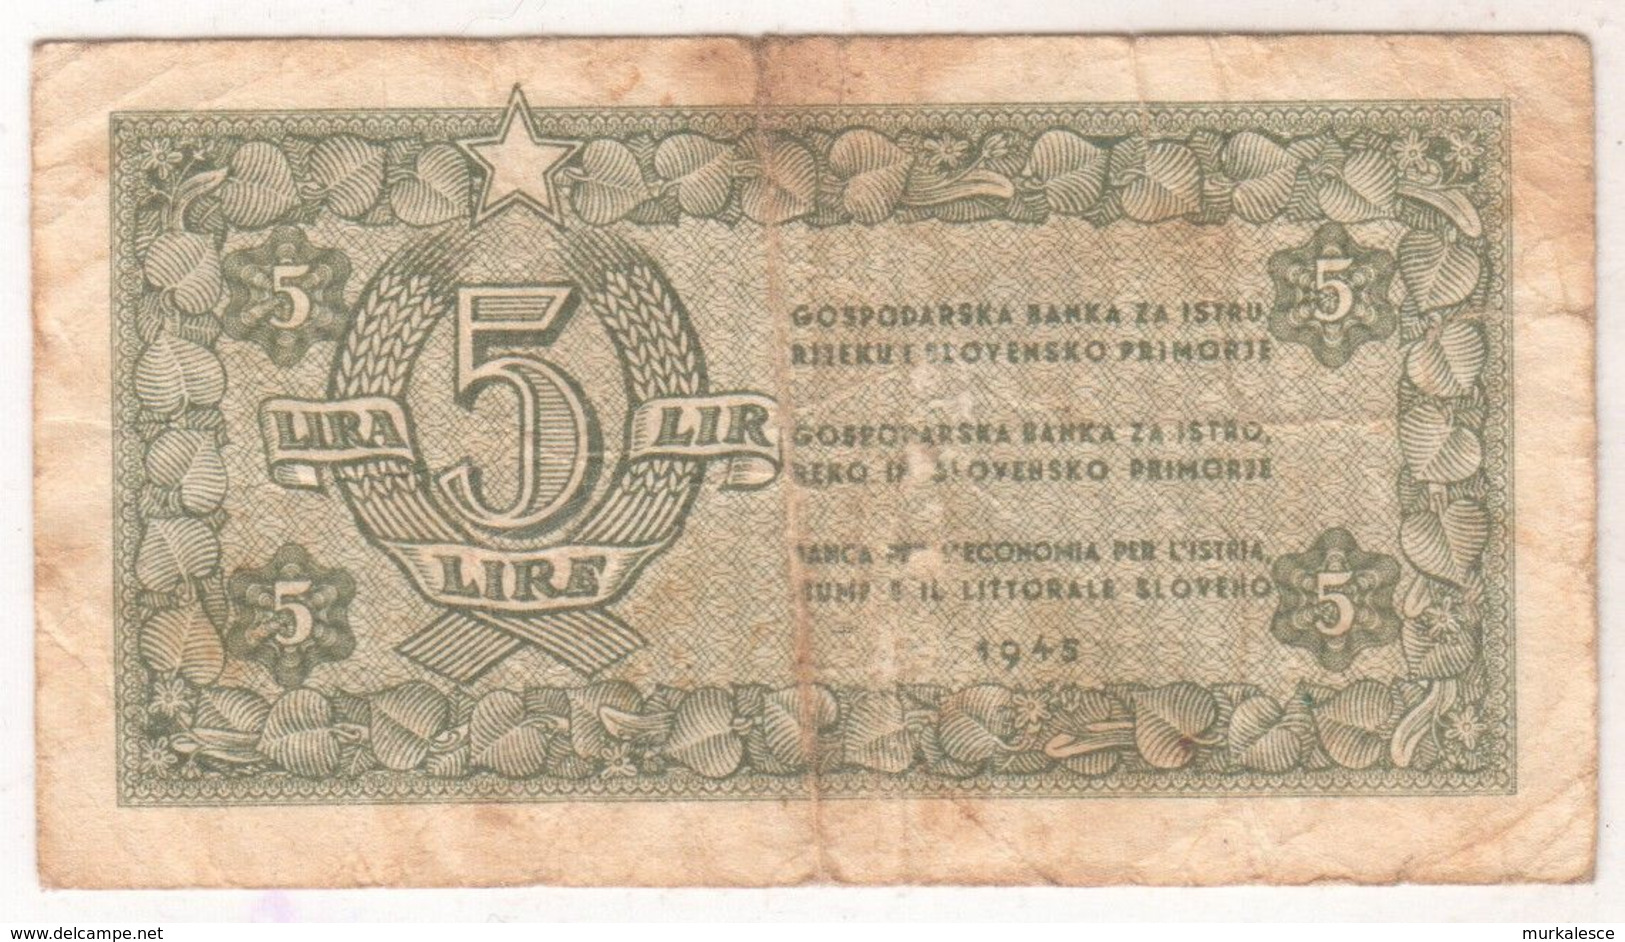 5923   5  LIRE  ISTRA  SLOVENSKO PRIMORJE    ISTRIA FIUME LITTORALE SLOVENO 1945 - Slovenia